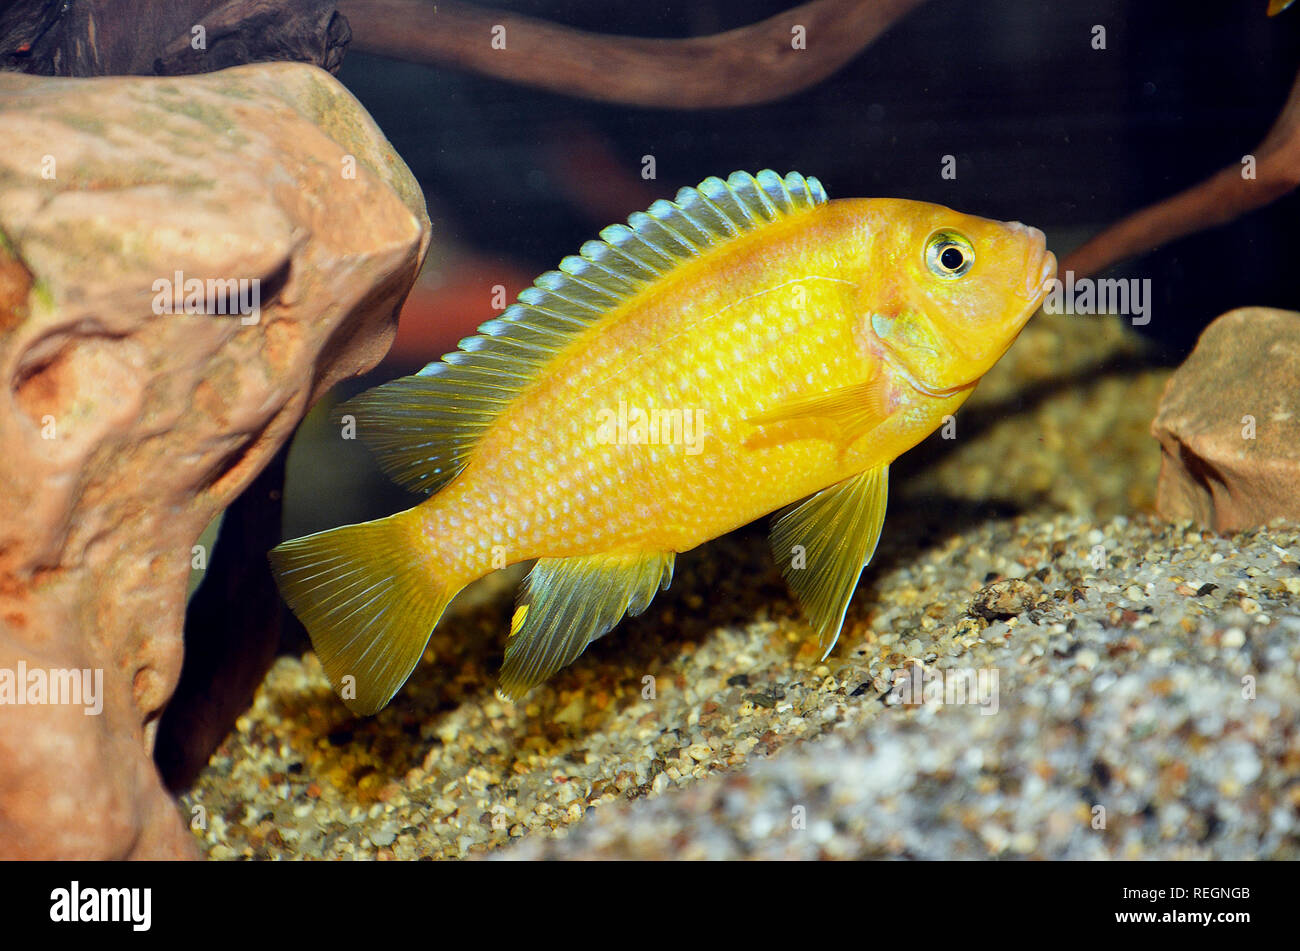 Malawi African cichlidae fish in tank, Labidochromis caeruleus Stock Photo